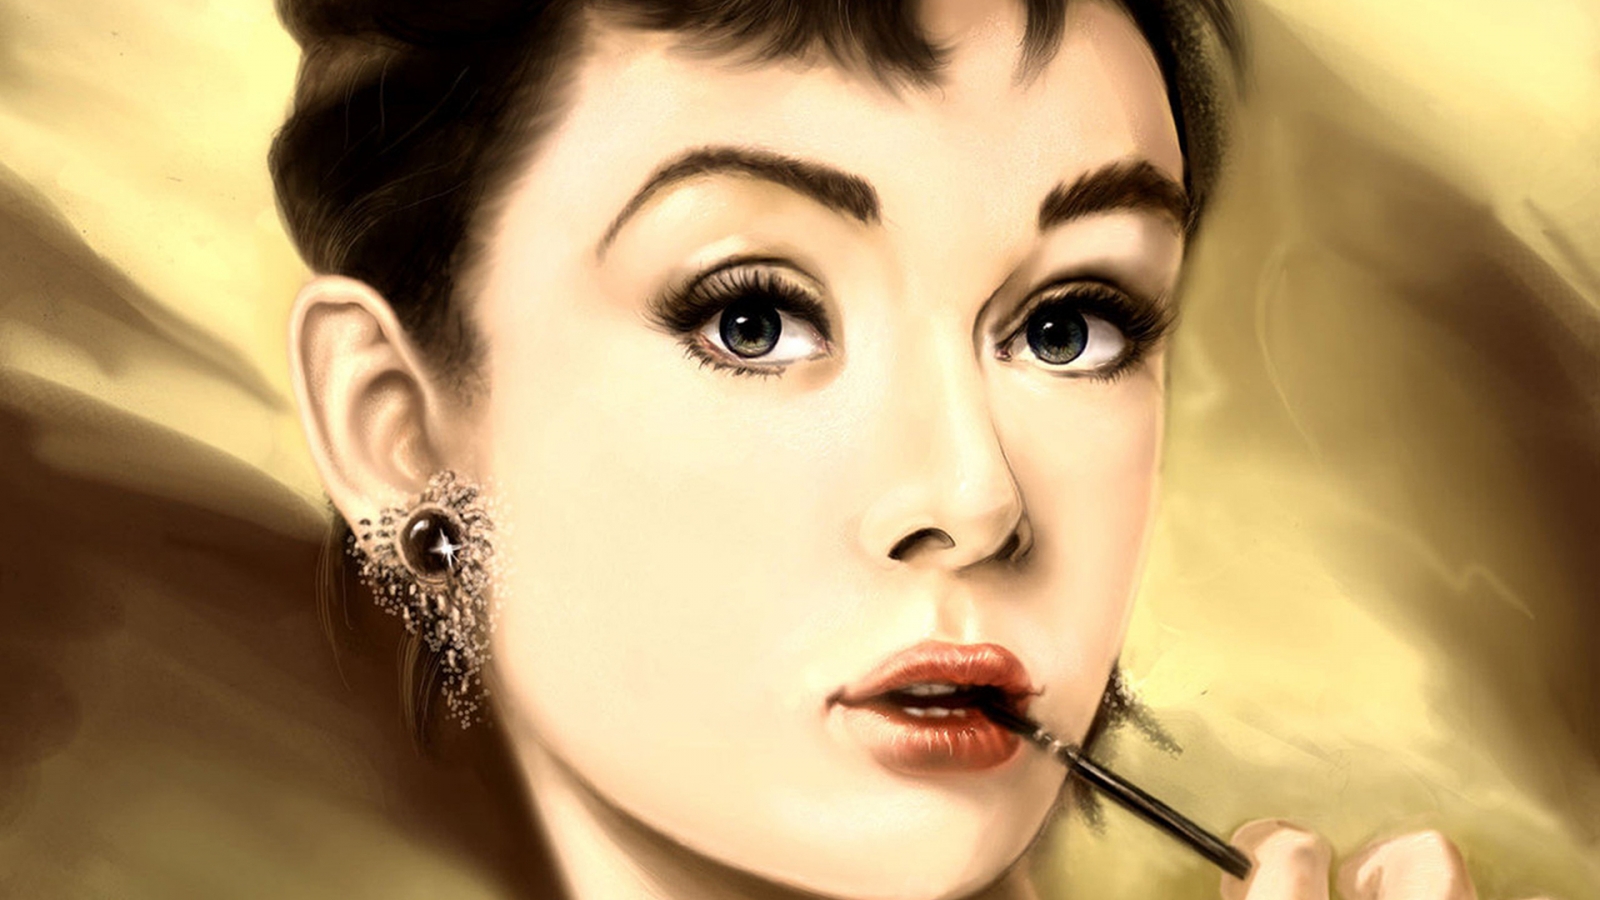 Audrey Hepburn Portrait Painting for 1600 x 900 HDTV resolution